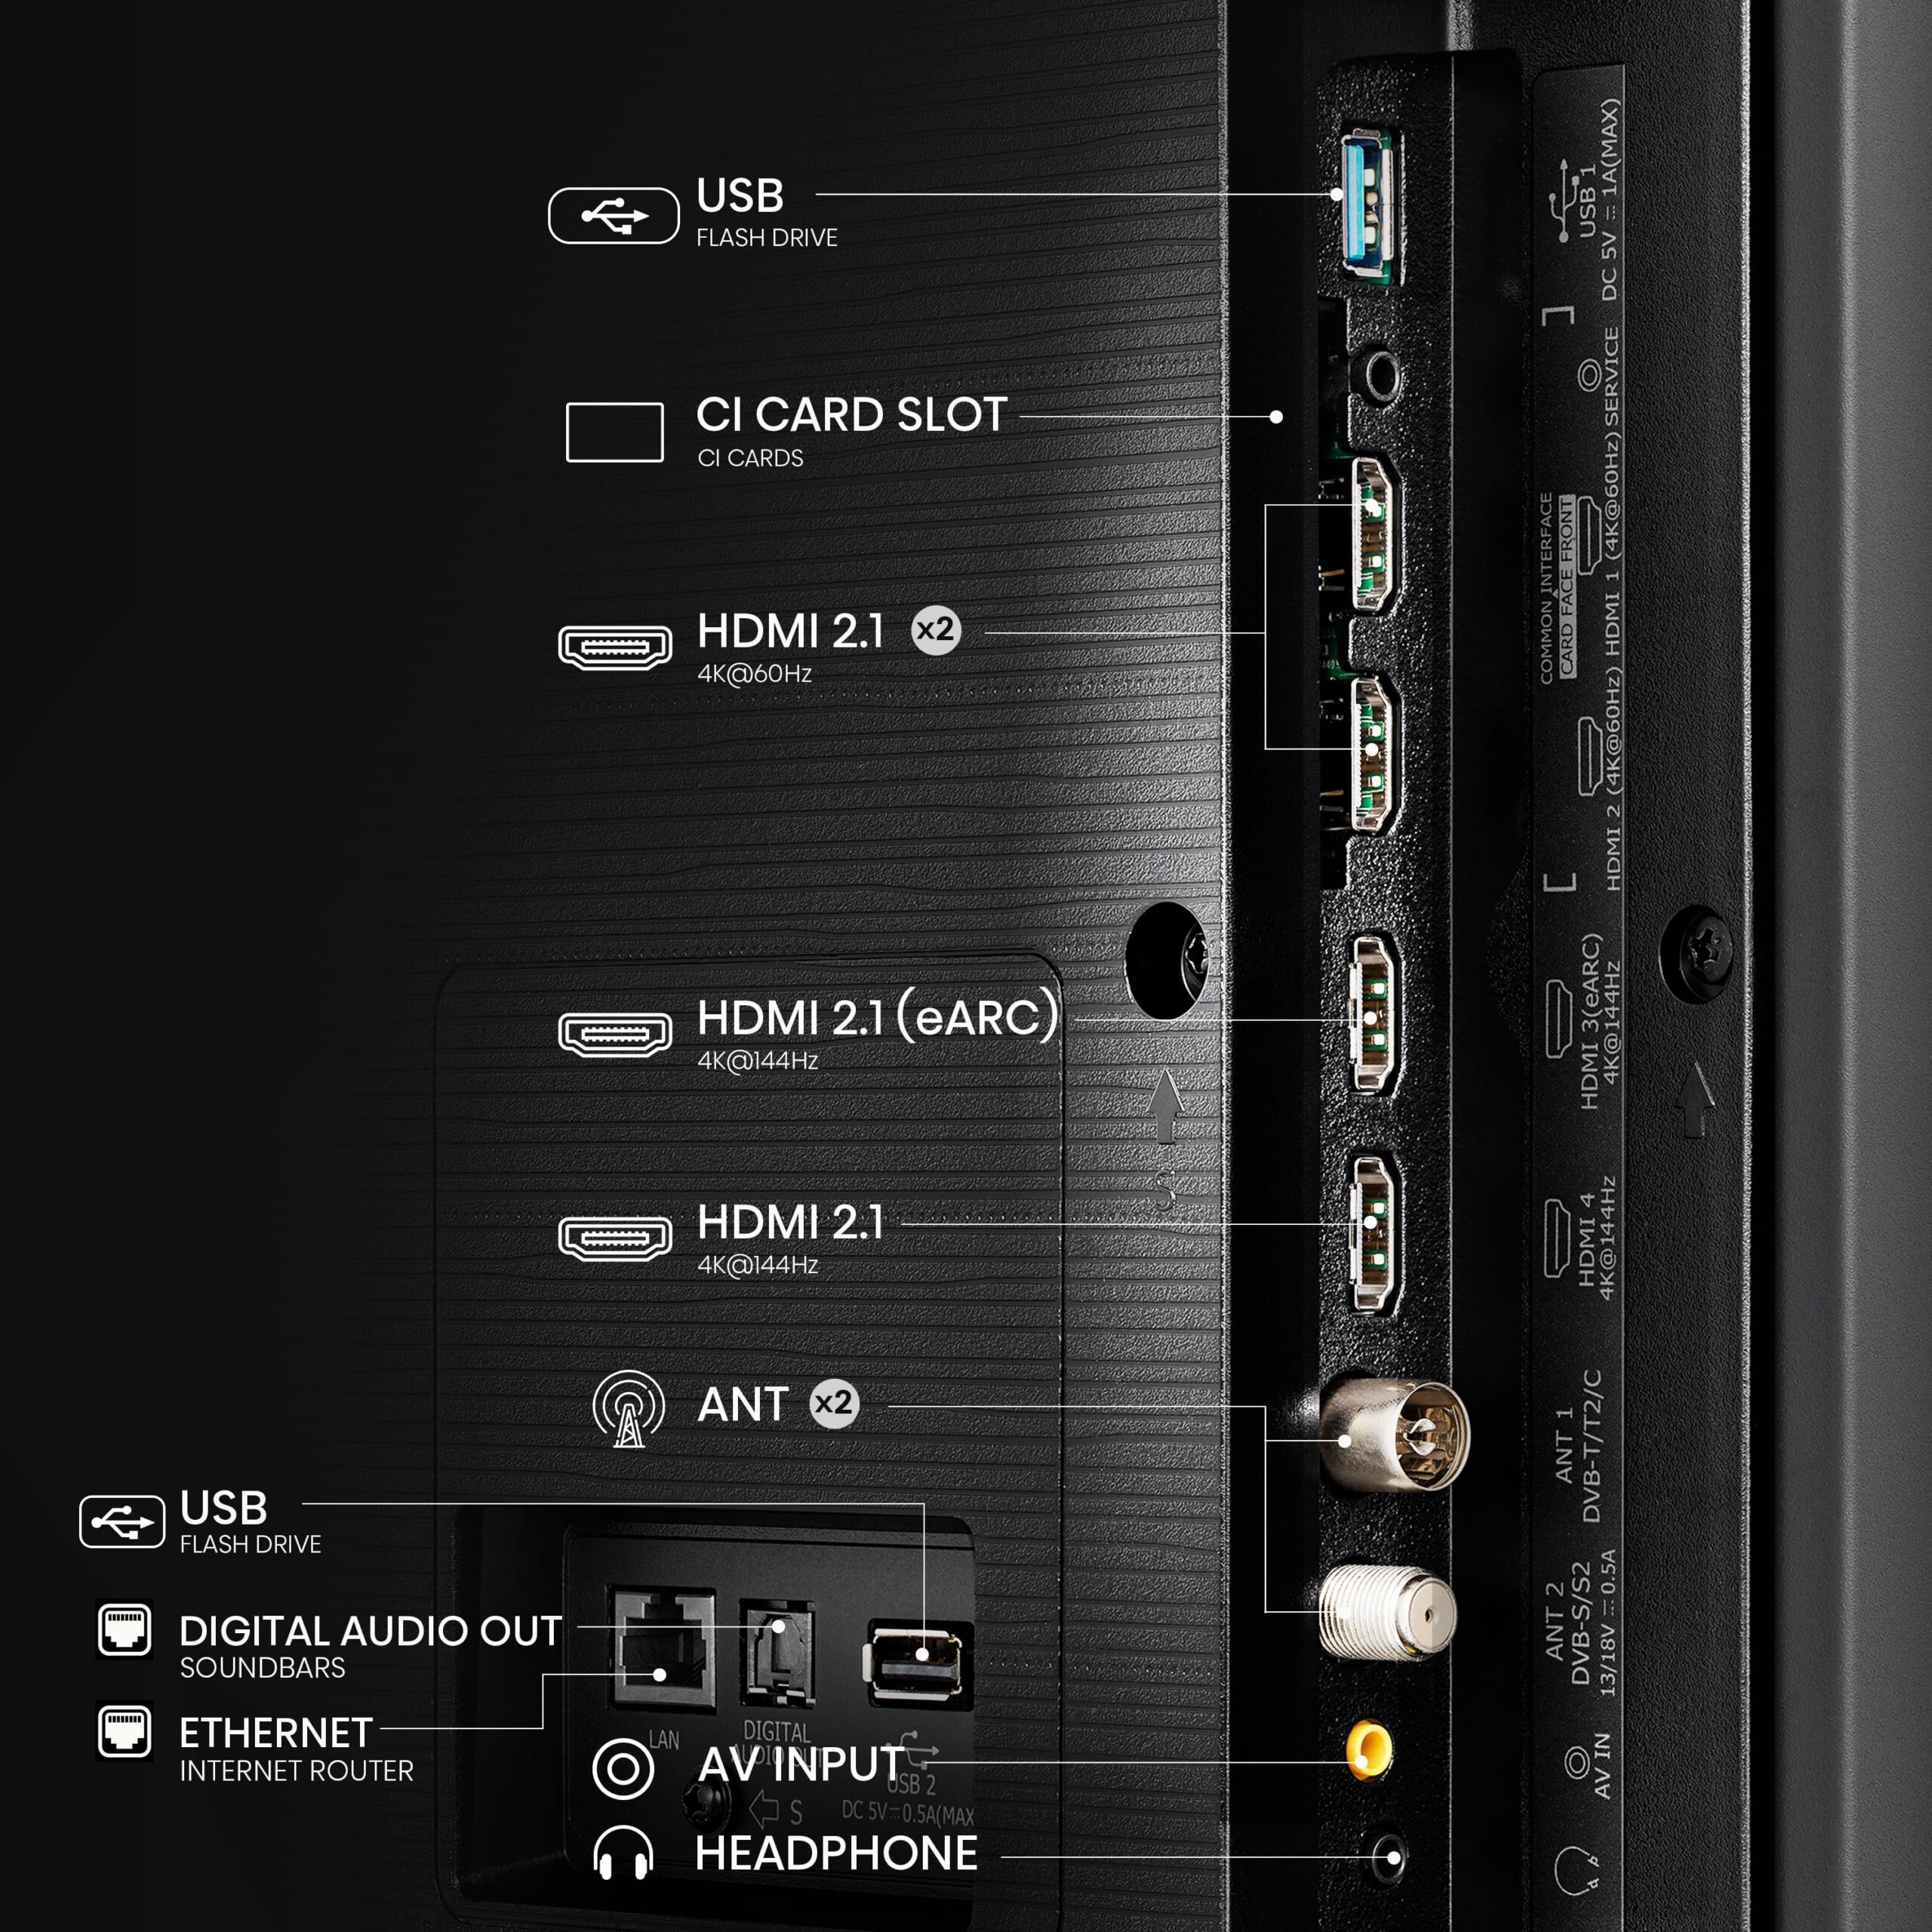 Hisense - QLED 85E7NQ Pro, Gaming TV, Modo Jogo de 144Hz, FALD, AMD Freesync Premium Pro